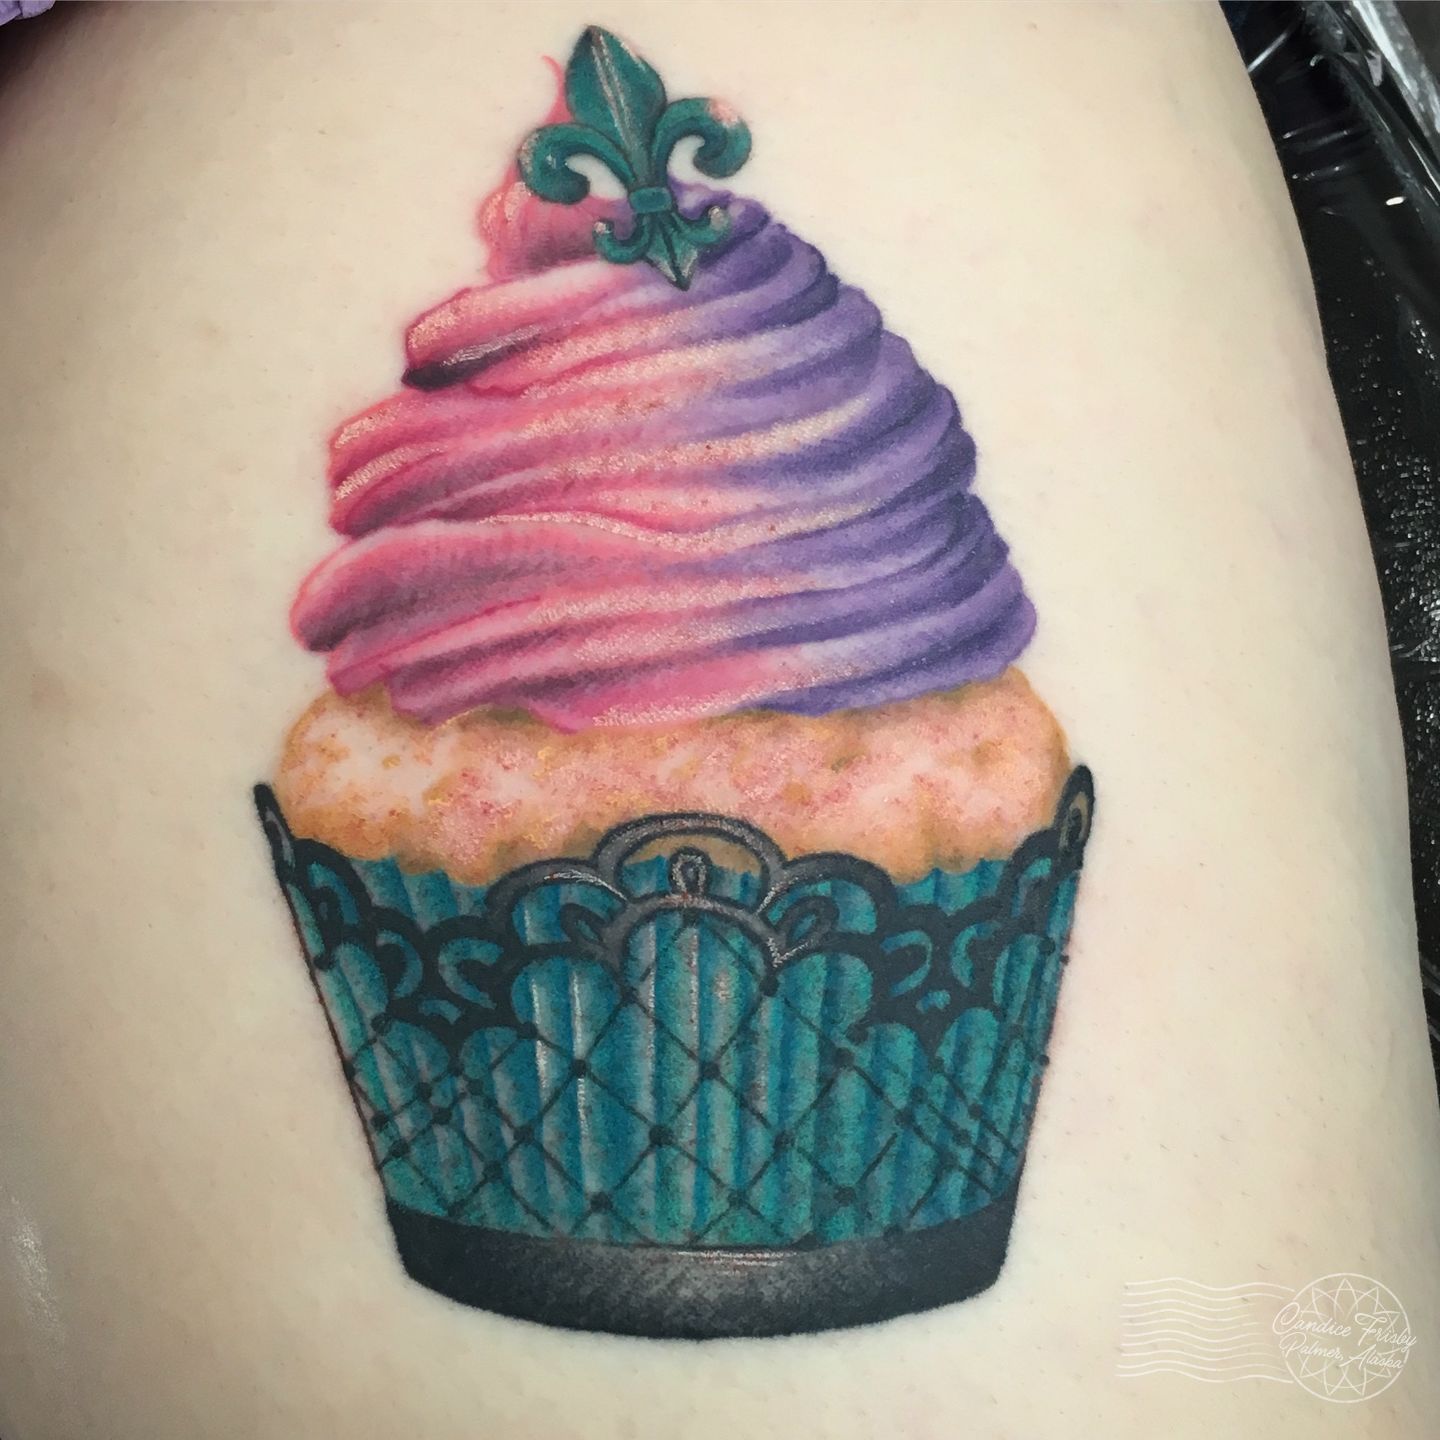 realistic cupcake tattoos